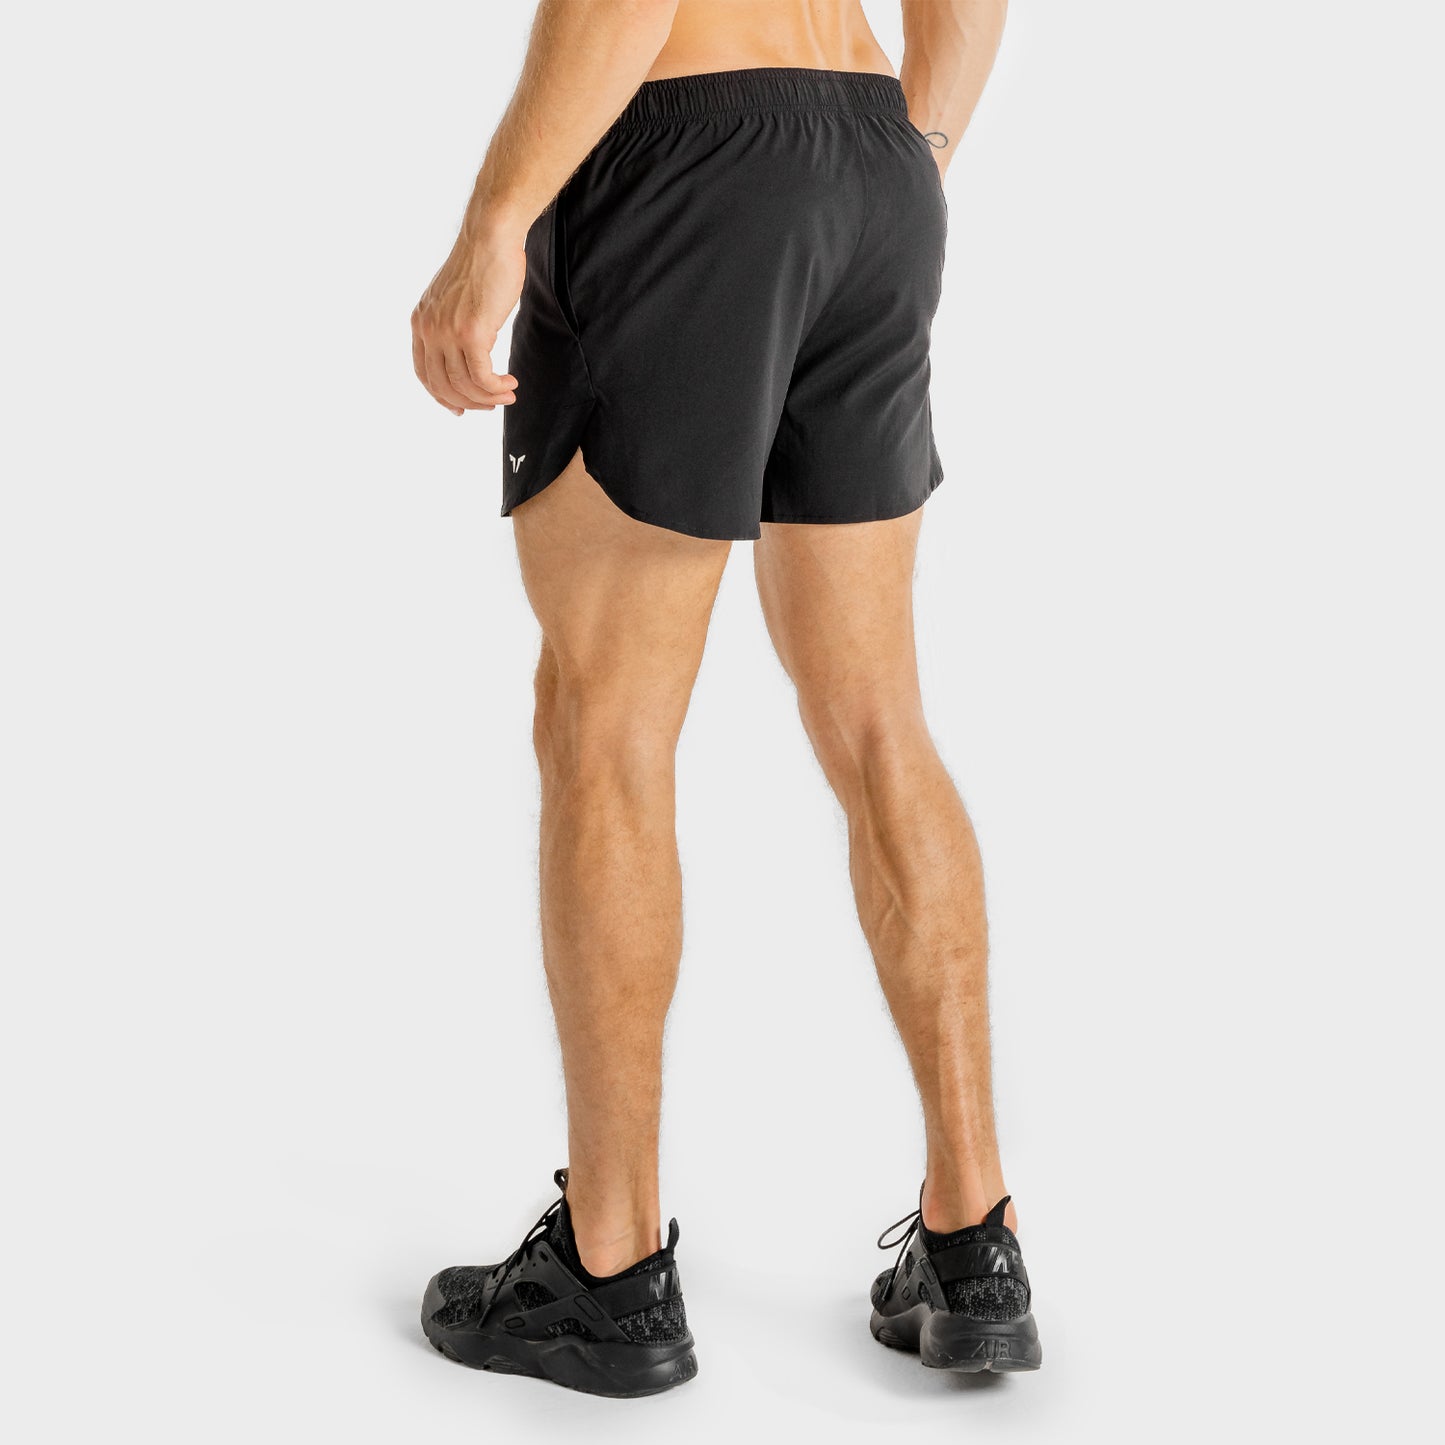 squatwolf-workout-short-for-men-core-shorts-onyx-gym-wear